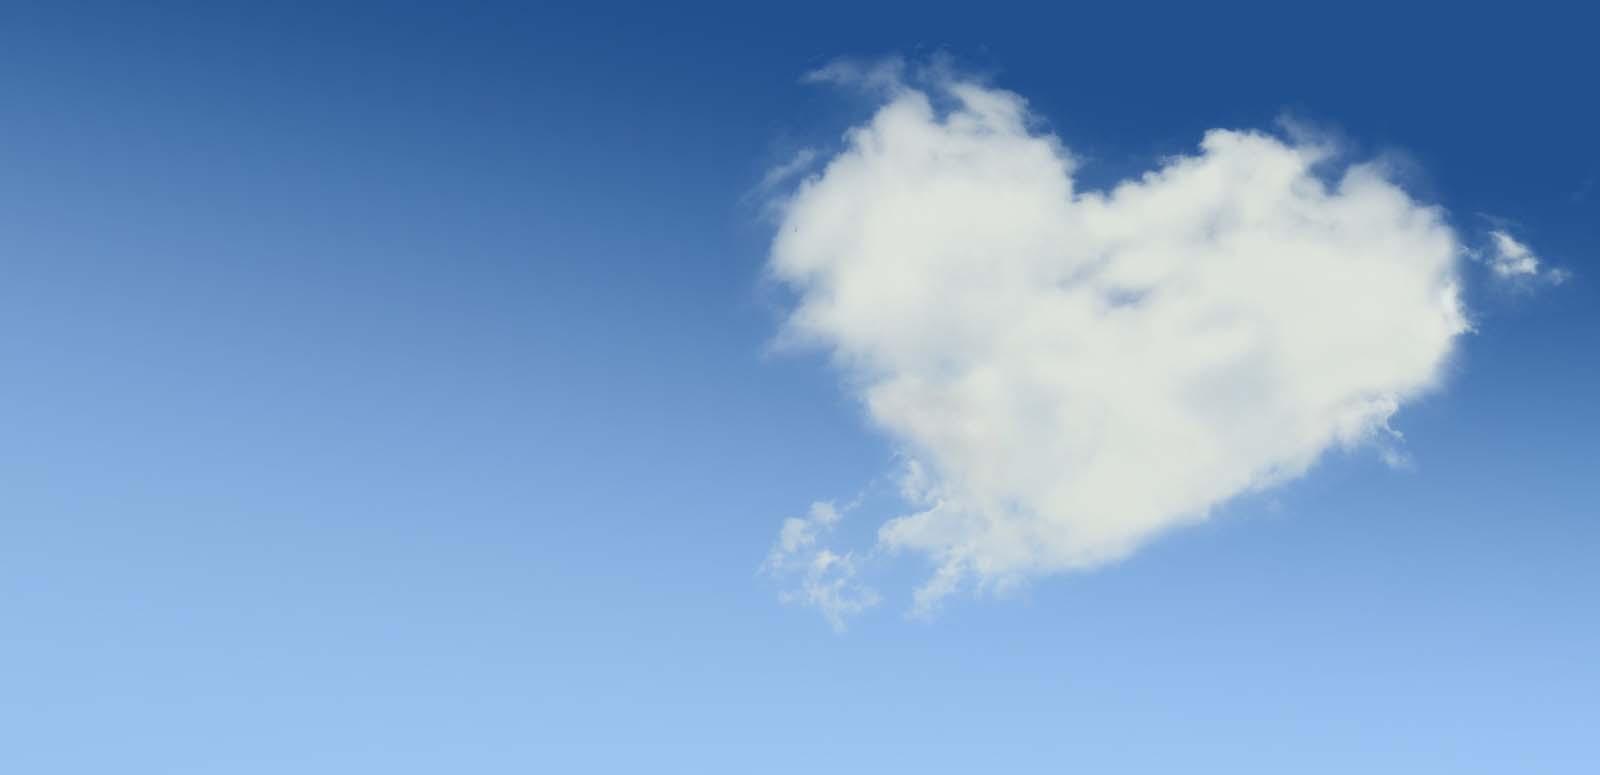 A heart-shaped cloud against a blue sky